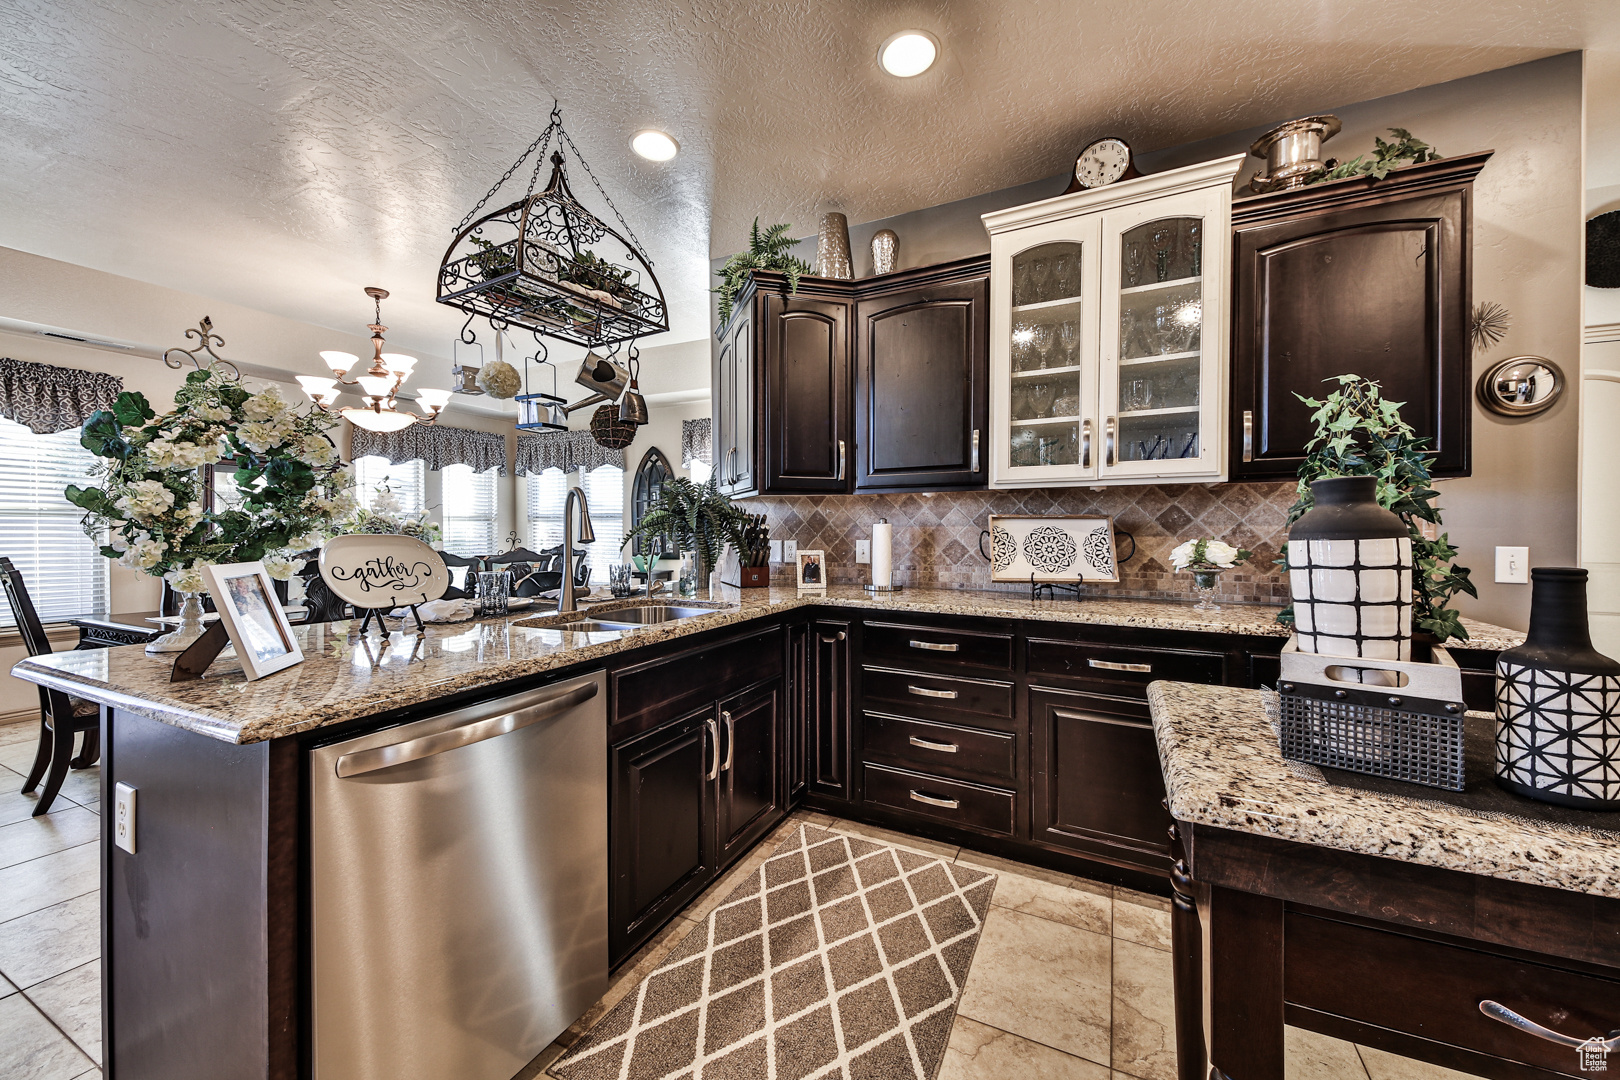 Kitchen featuring light tile flooring, dishwasher, a textured ceiling, tasteful backsplash, and sink